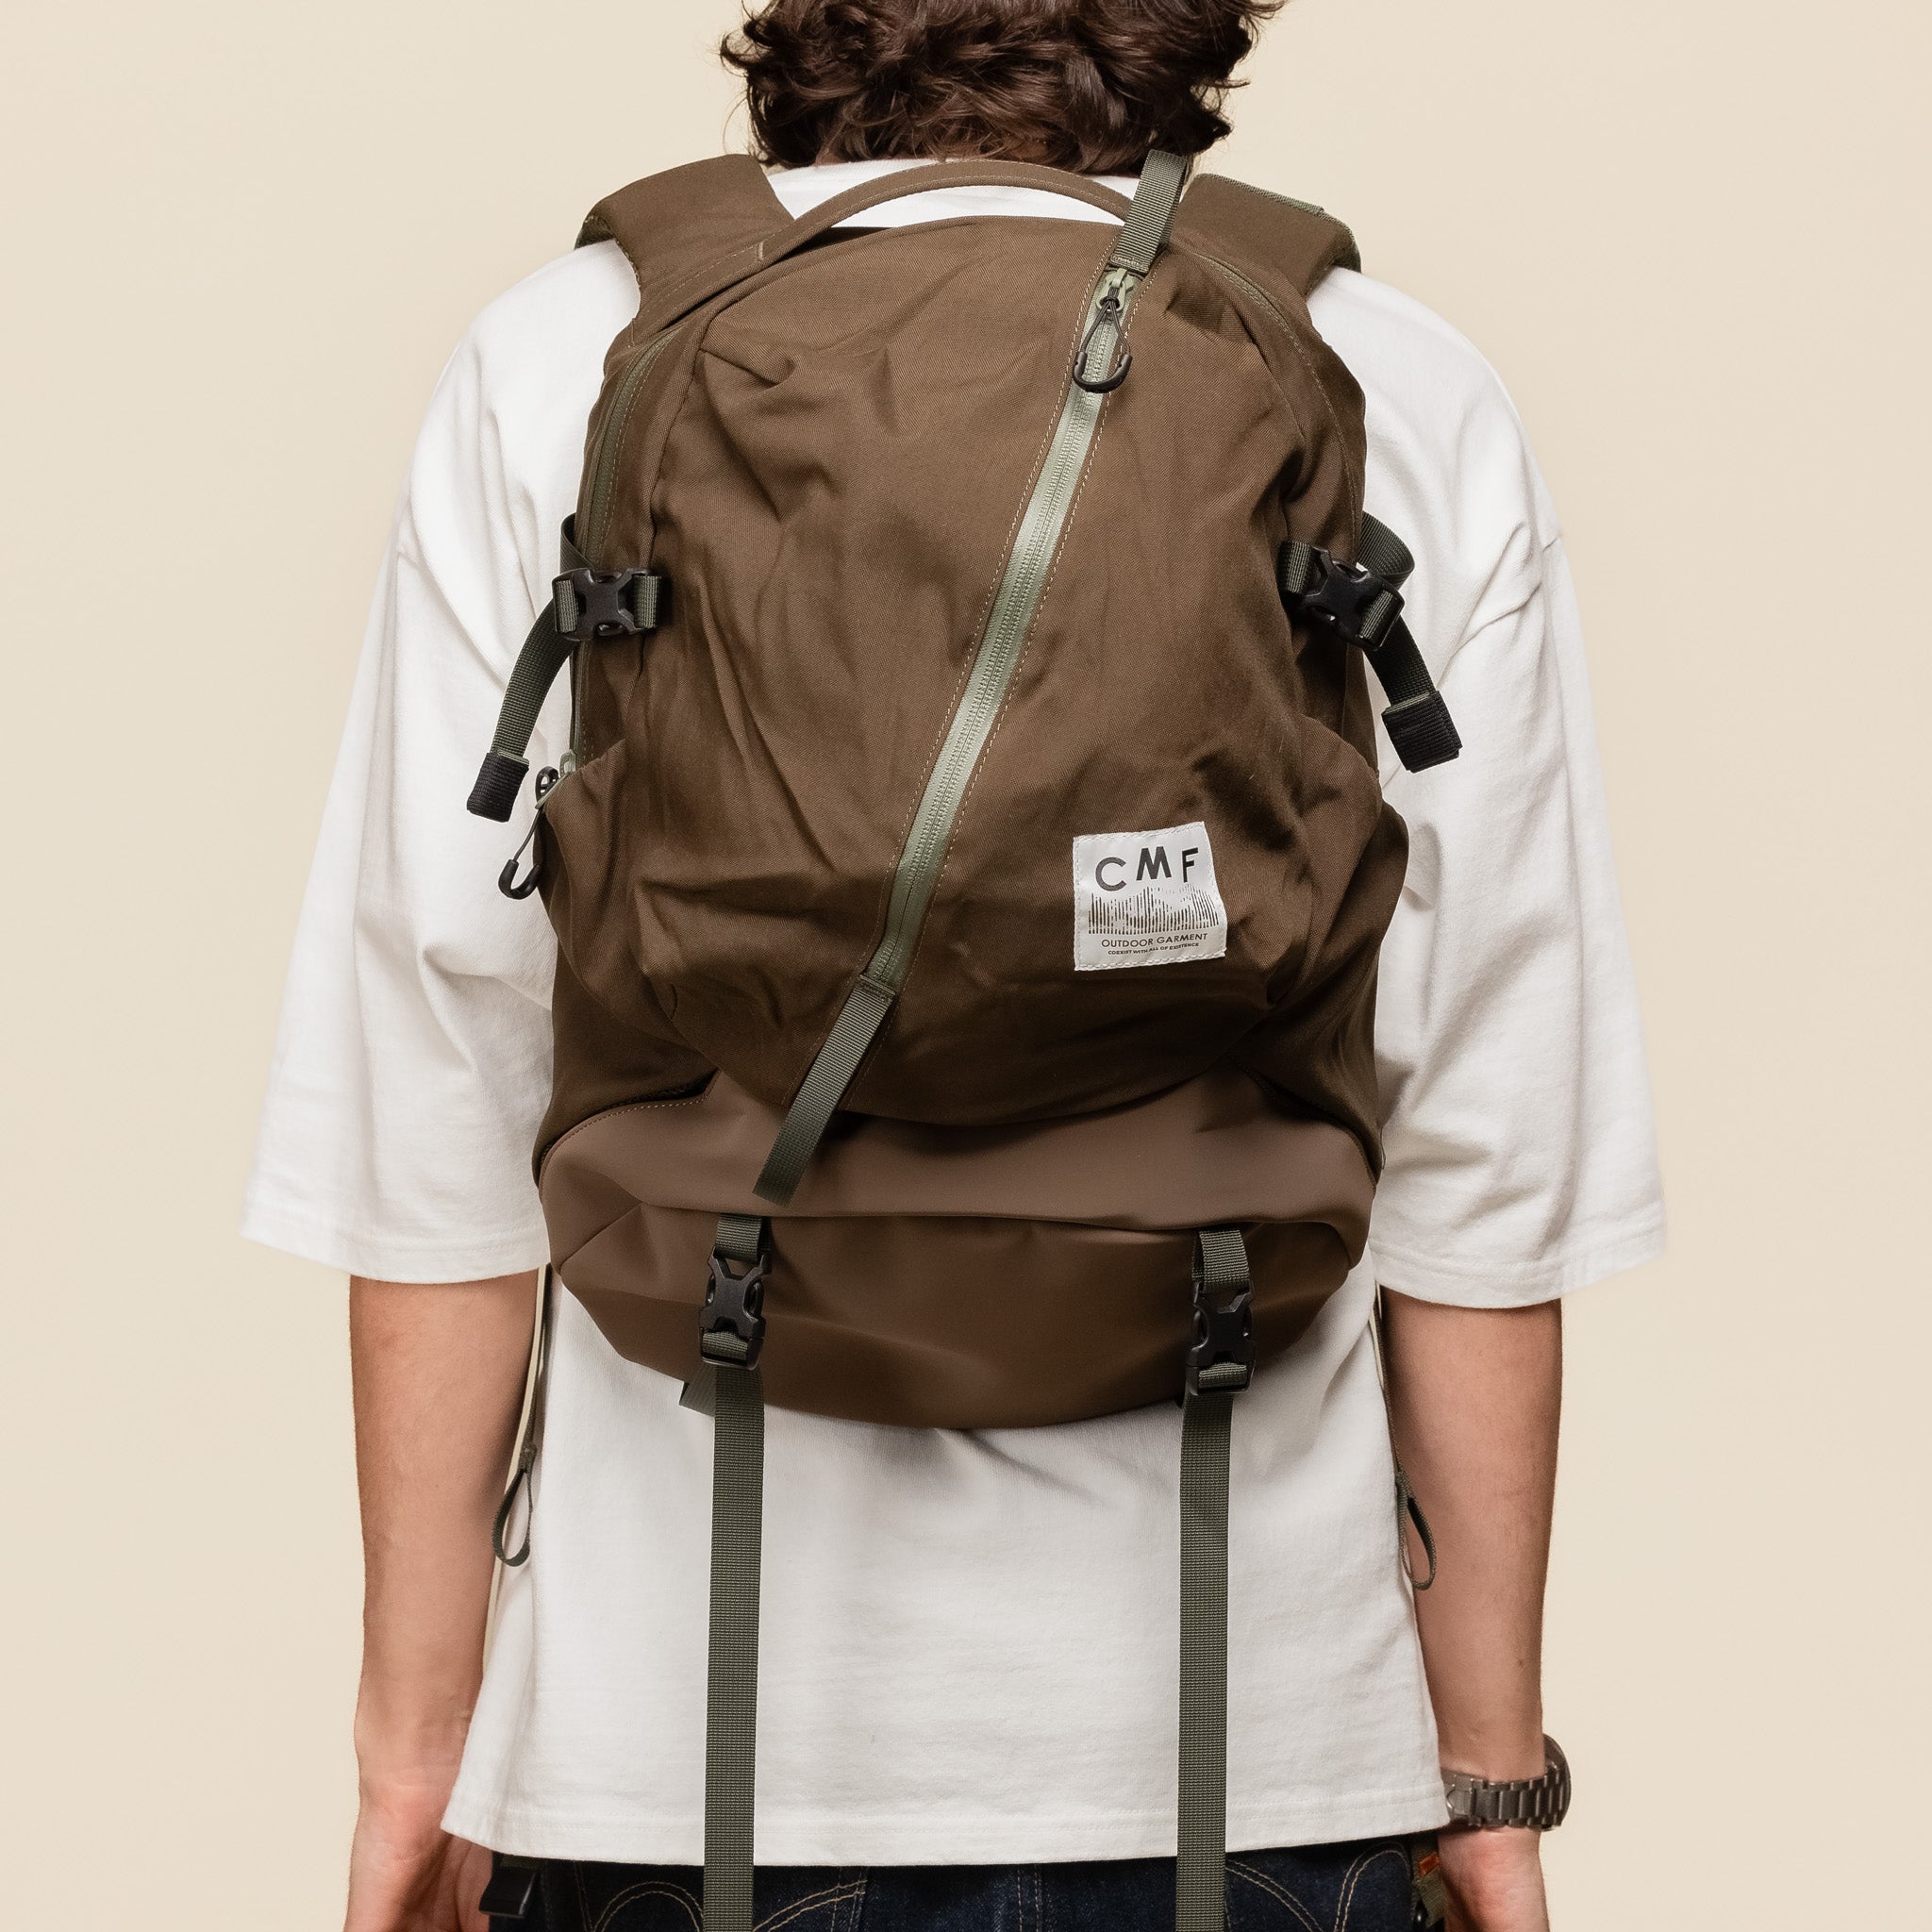 CMF Comfy Outdoor Garment - Weekenderz 20 Smooth Nylon Backpack - Khaki